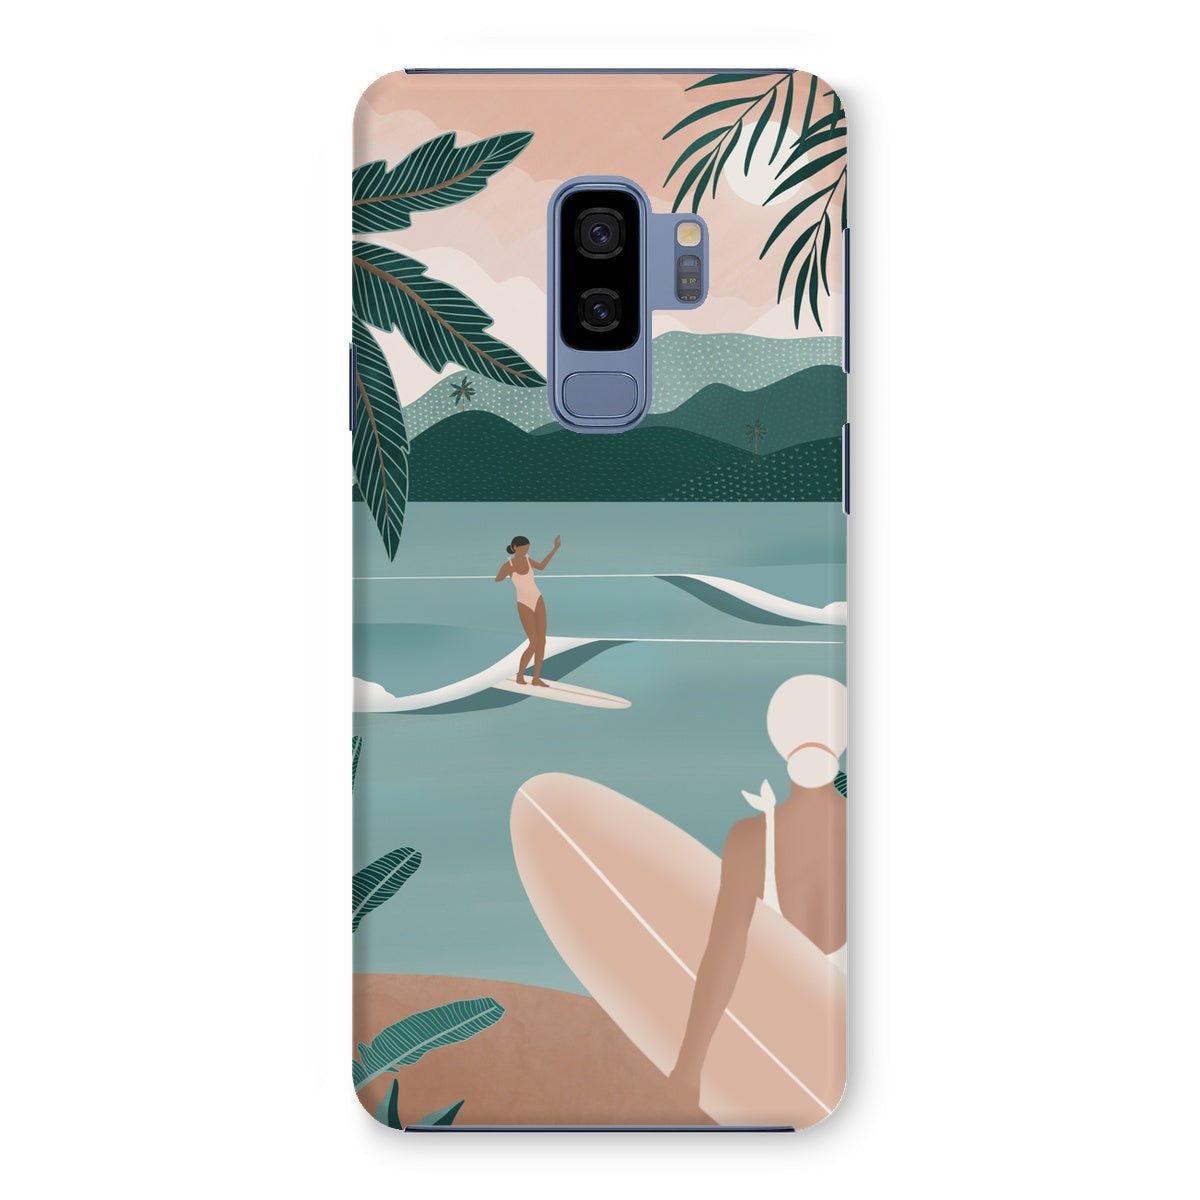 Surfers' heaven slim phone case